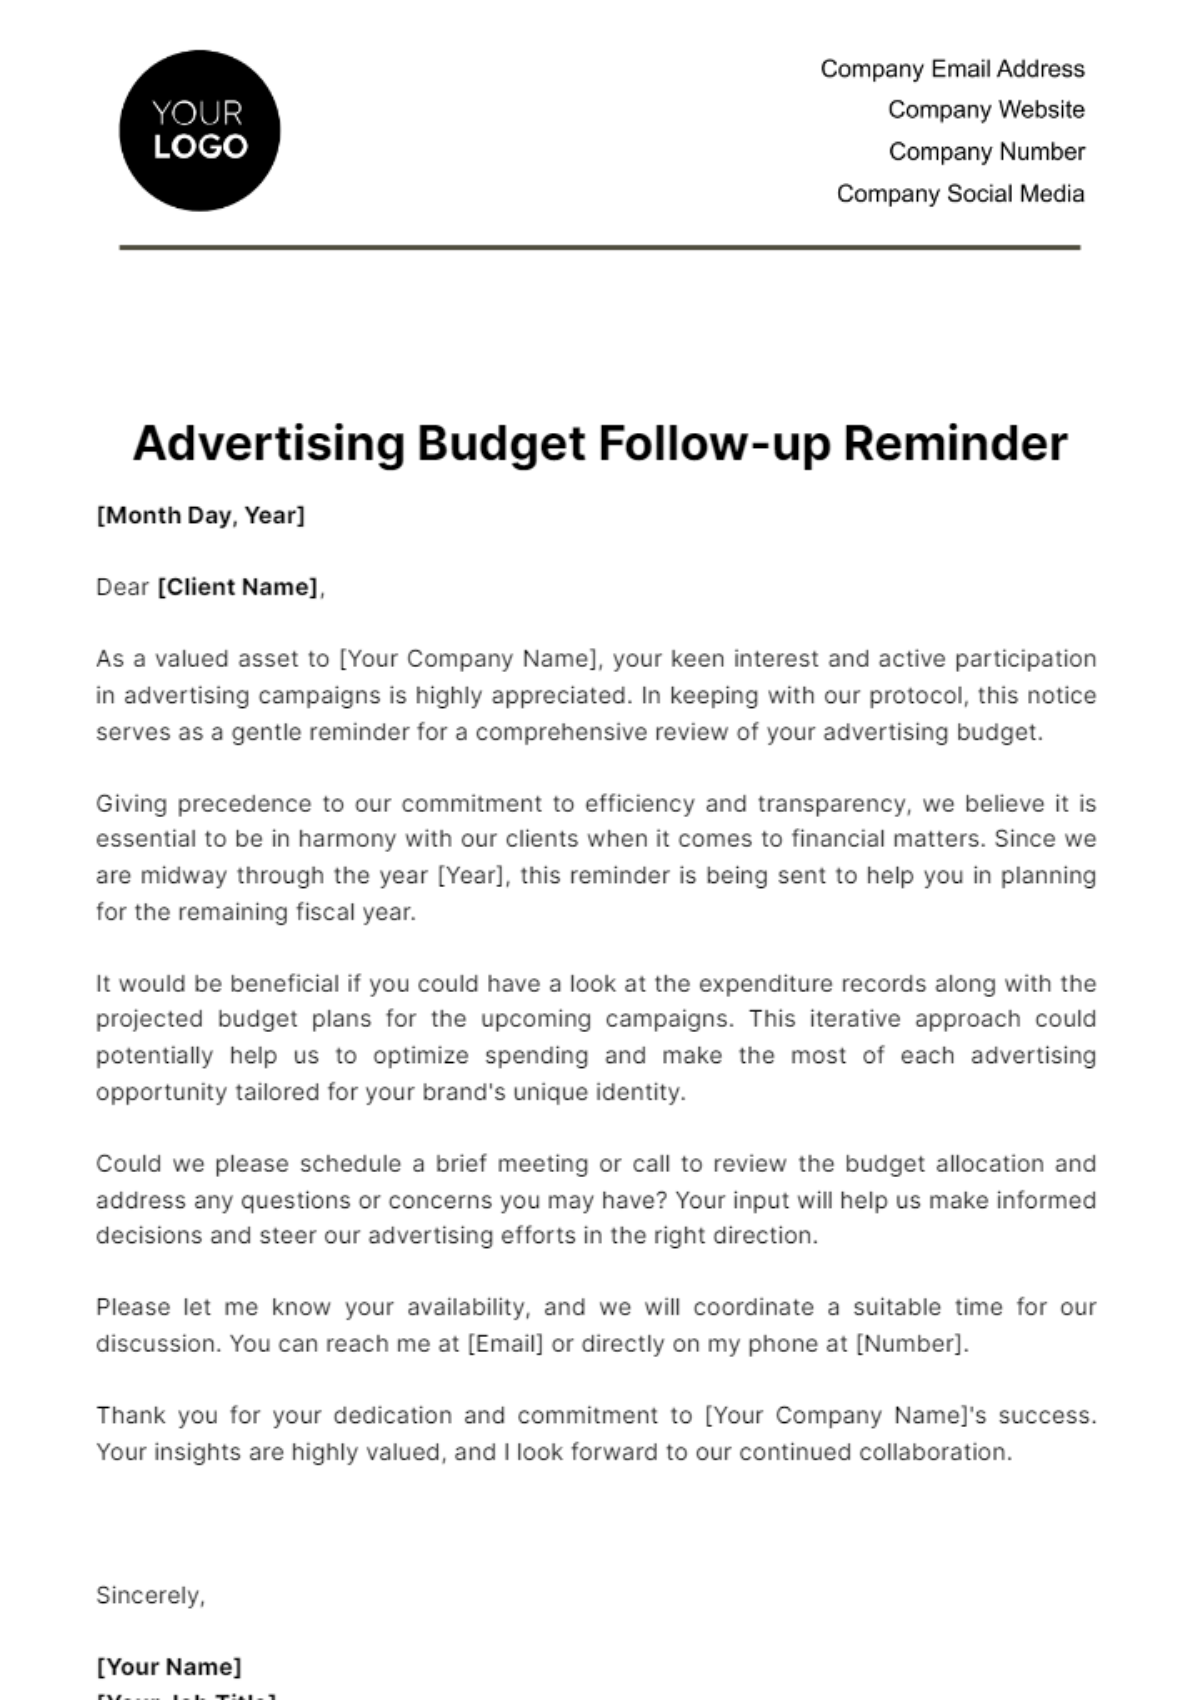 Free Advertising Budget Follow-up Reminder Template